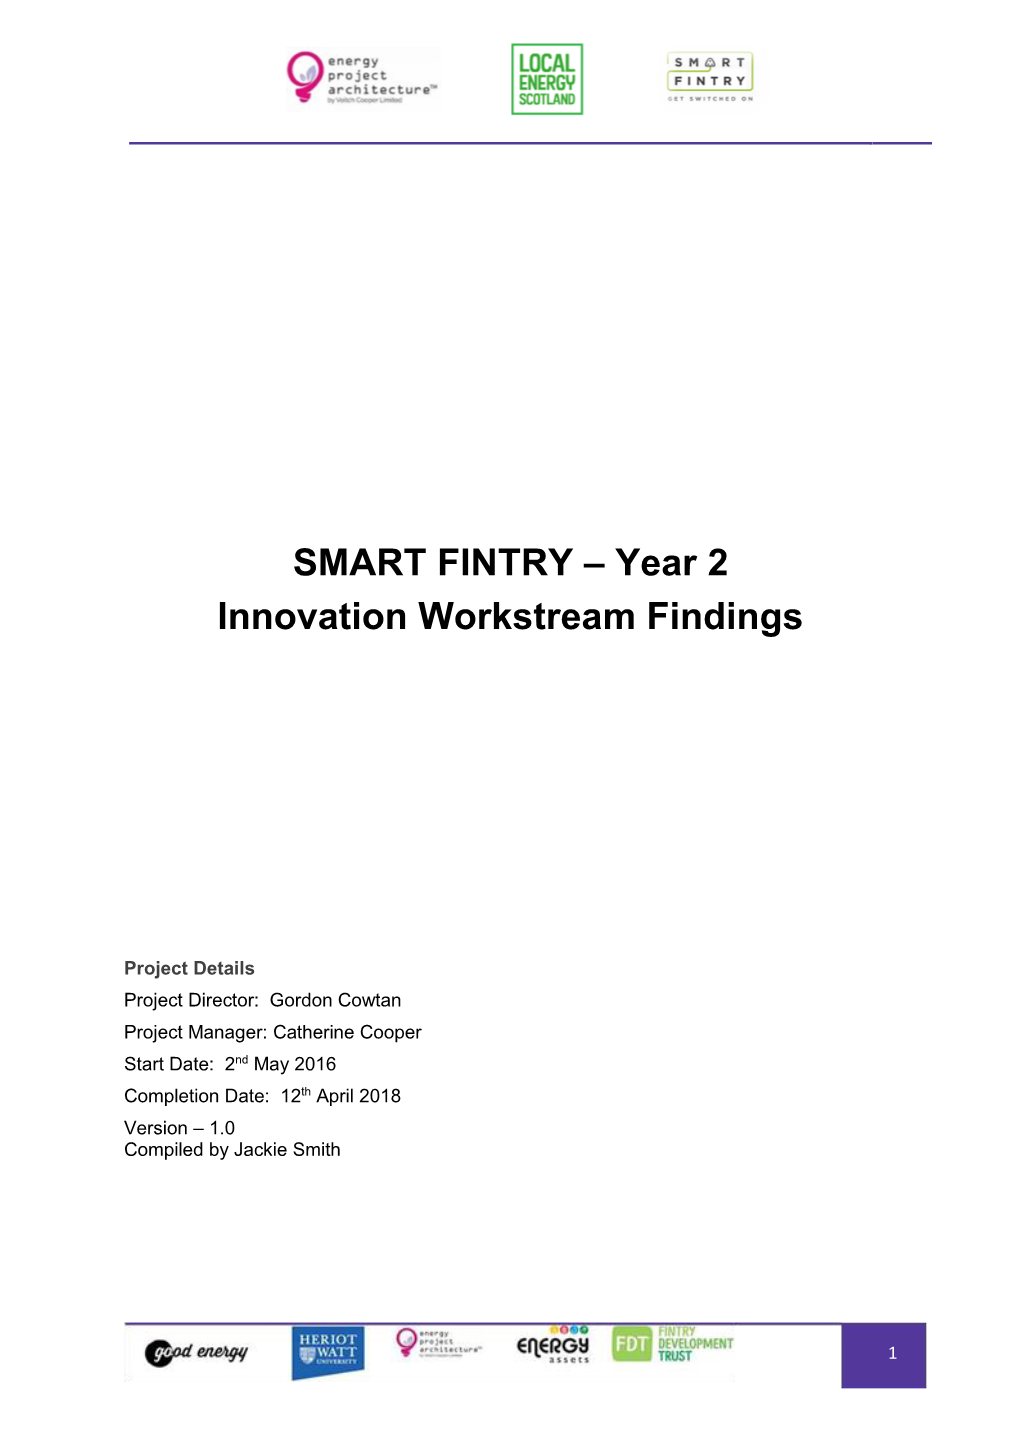 SMART FINTRY – Year 2 Innovation Workstream Findings